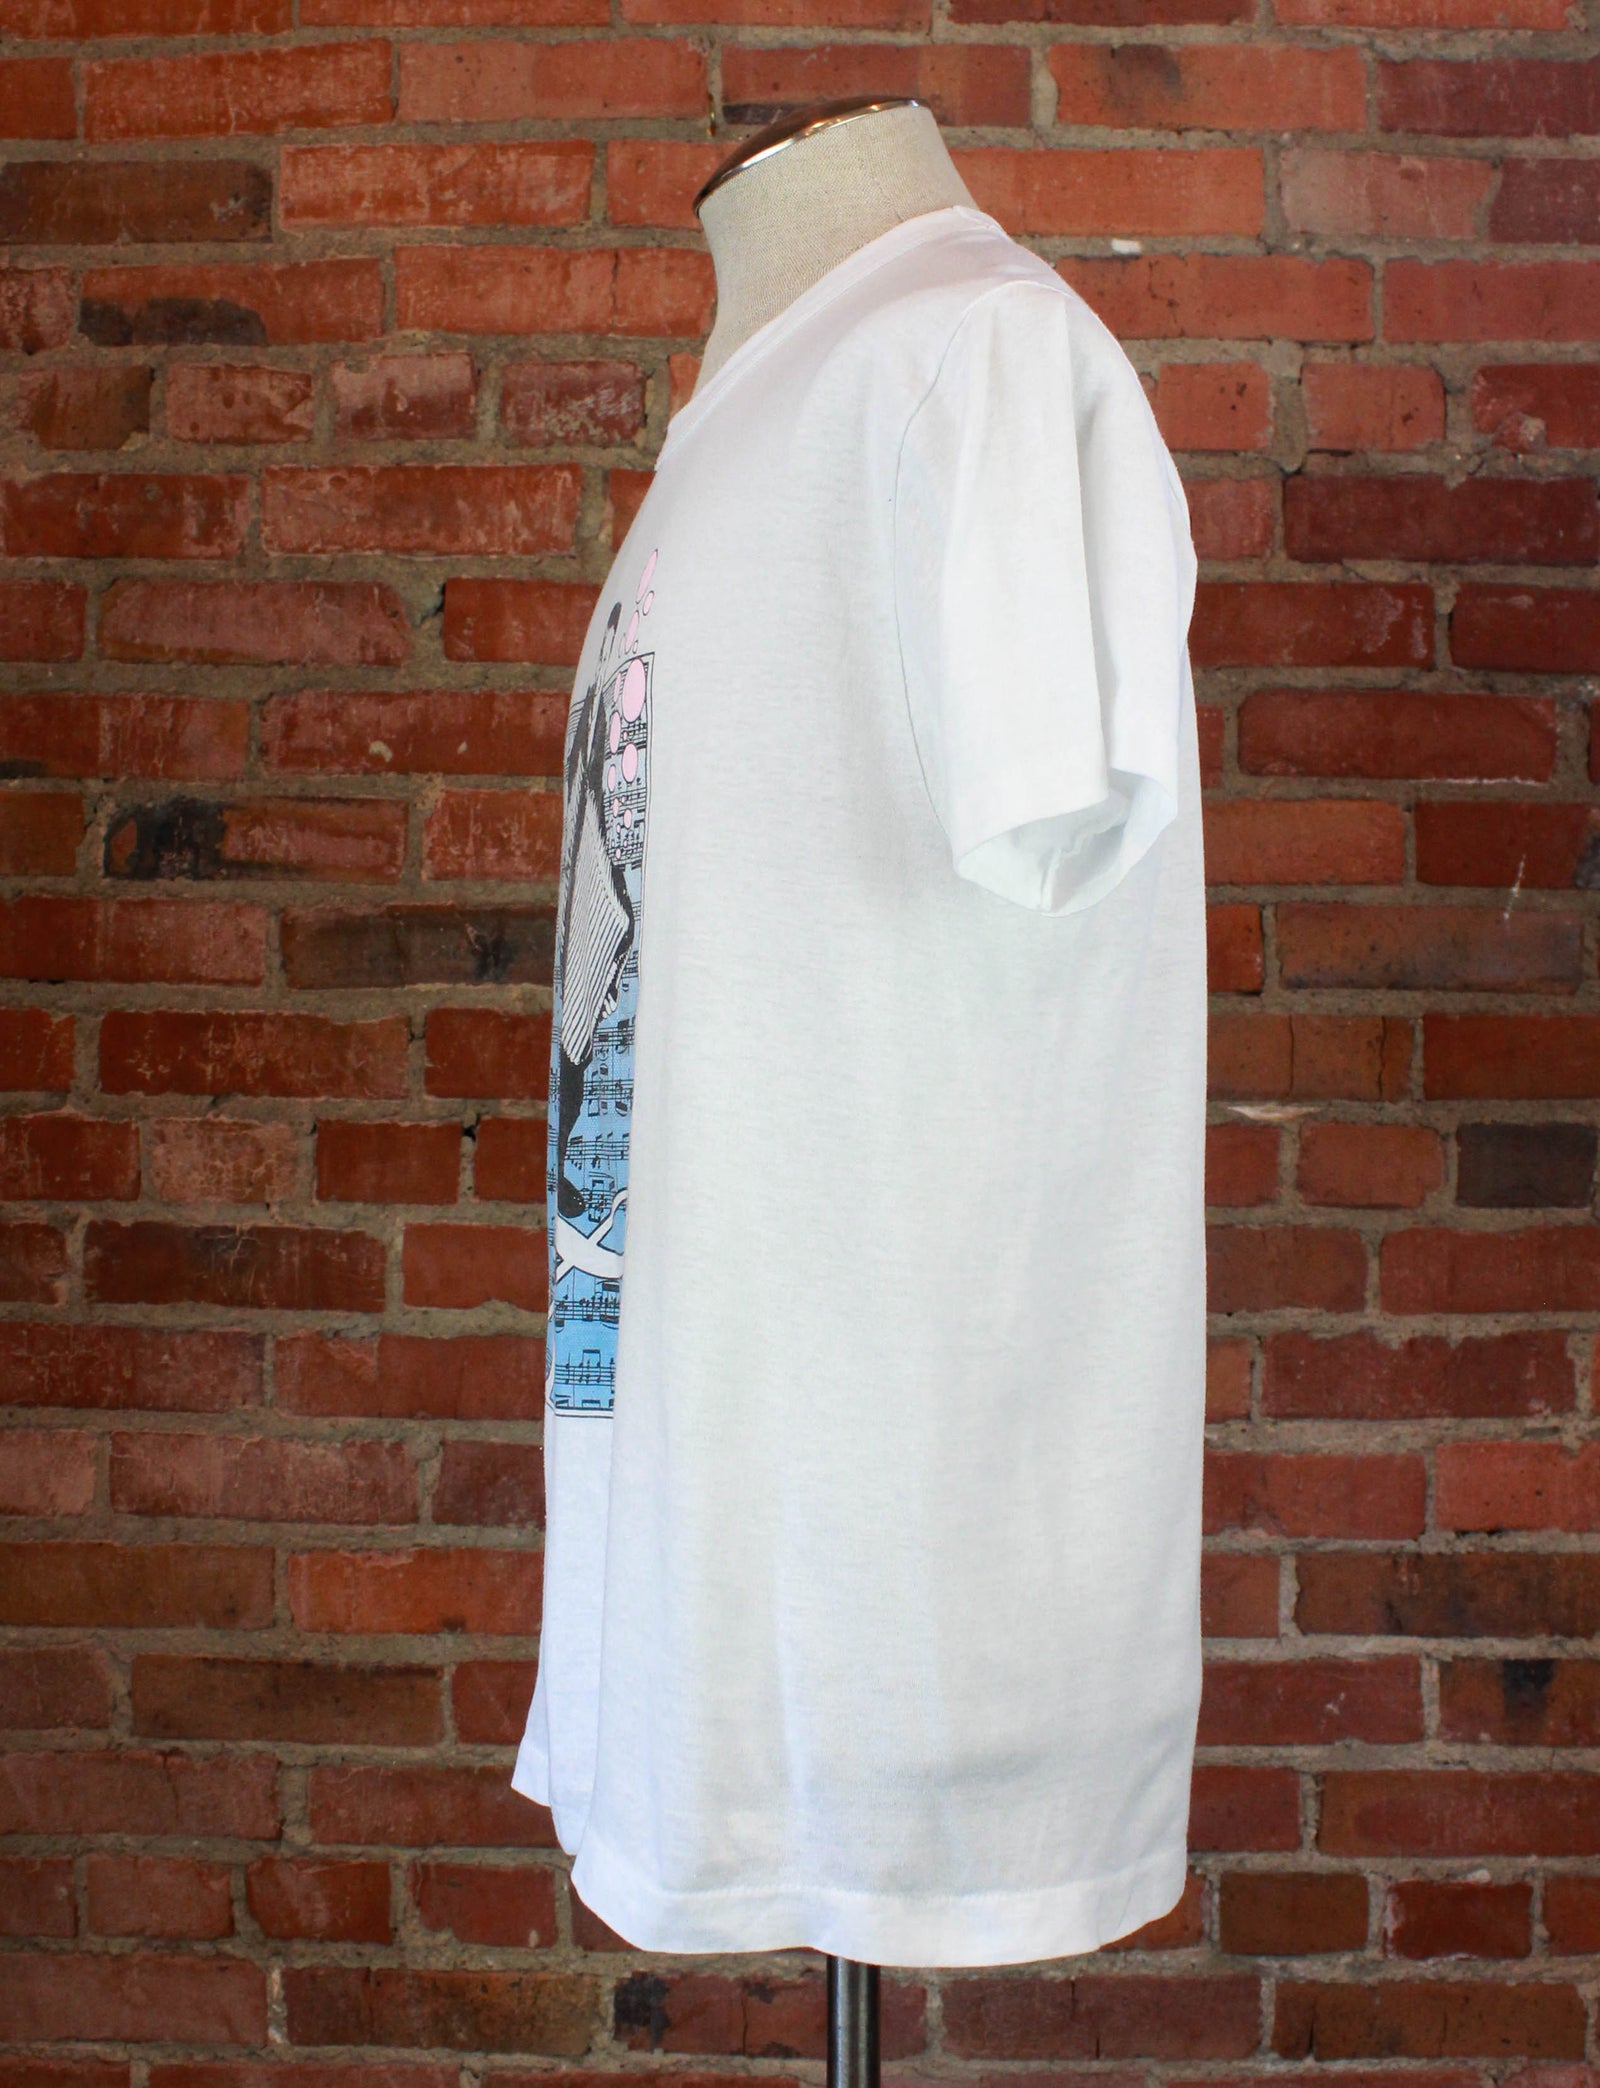 Vintage 80's Lawrence Welk Graphic T Shirt White Unisex Large